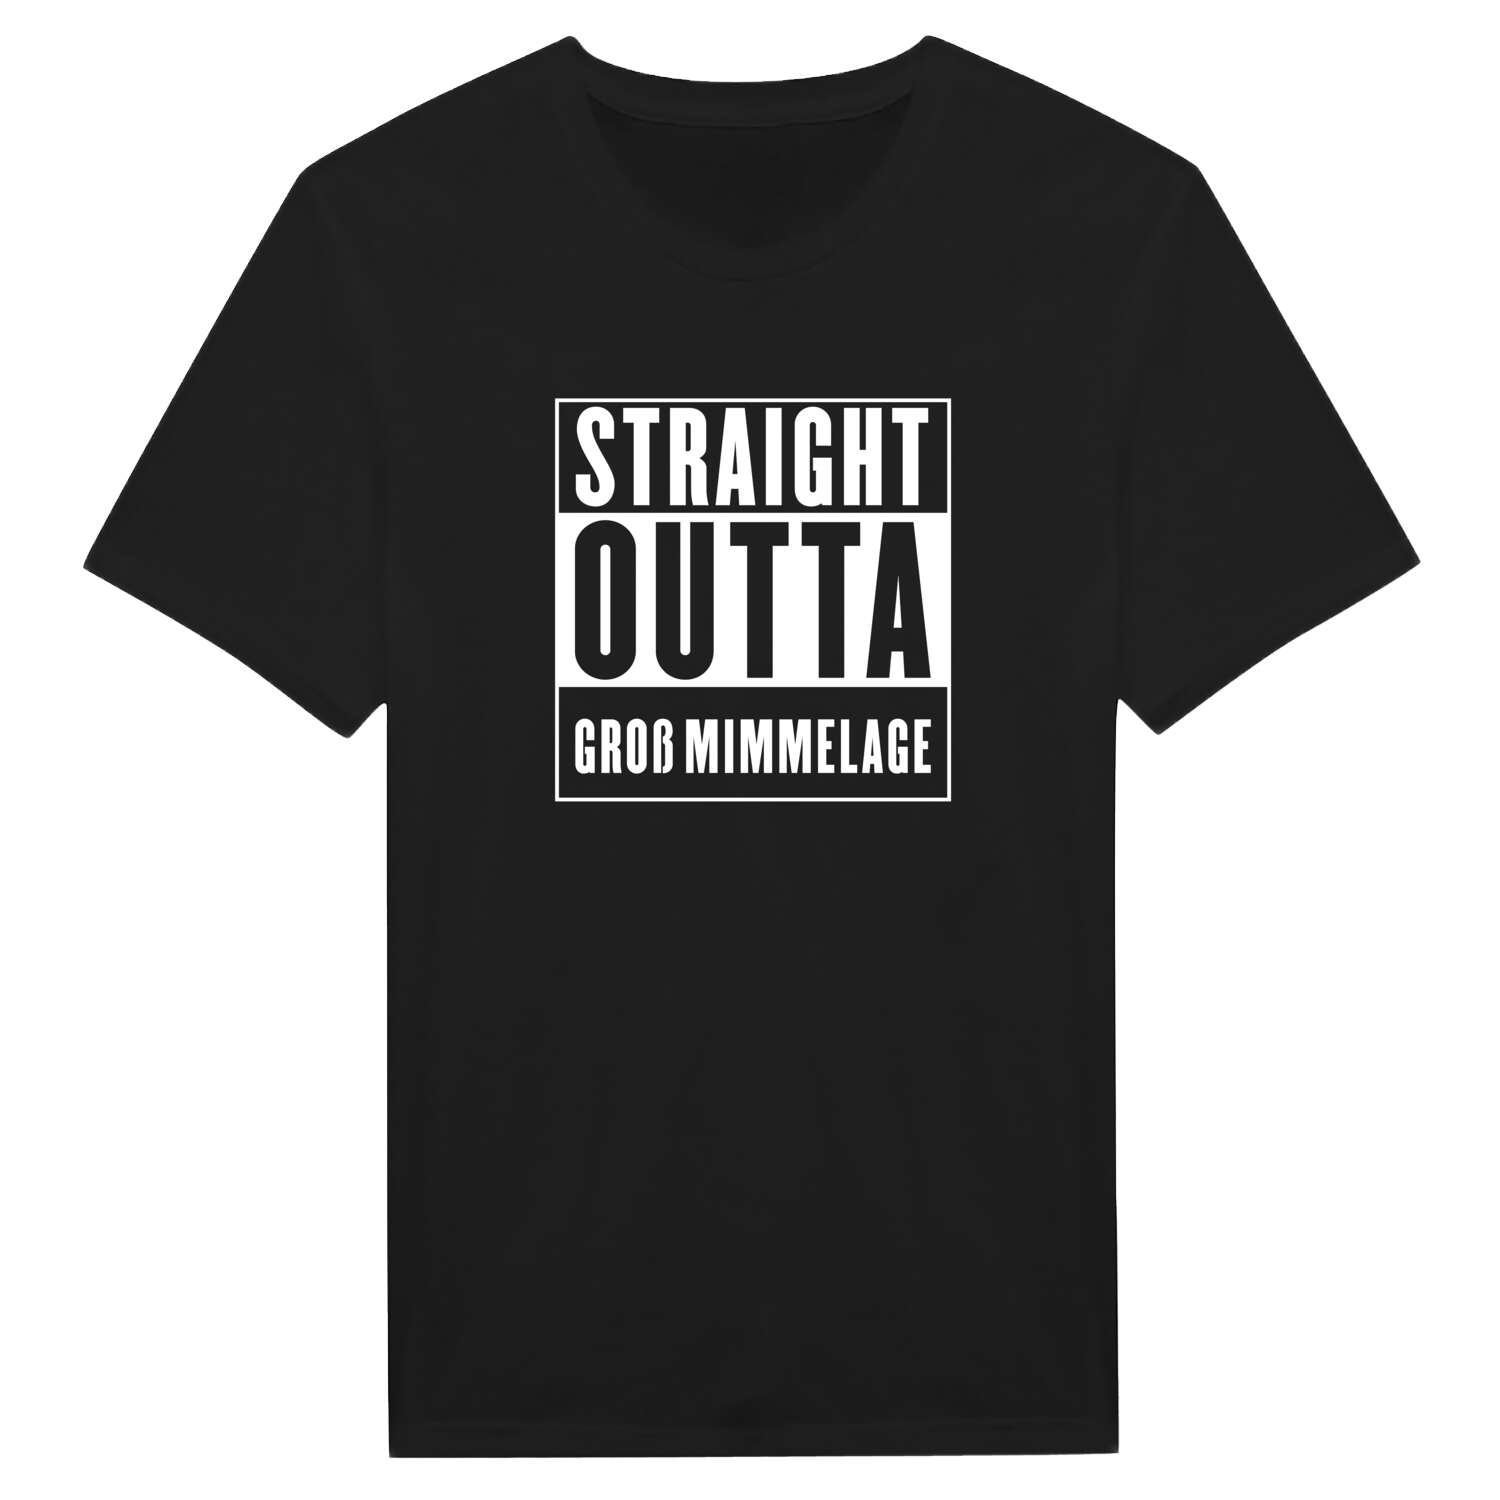 Groß Mimmelage T-Shirt »Straight Outta«